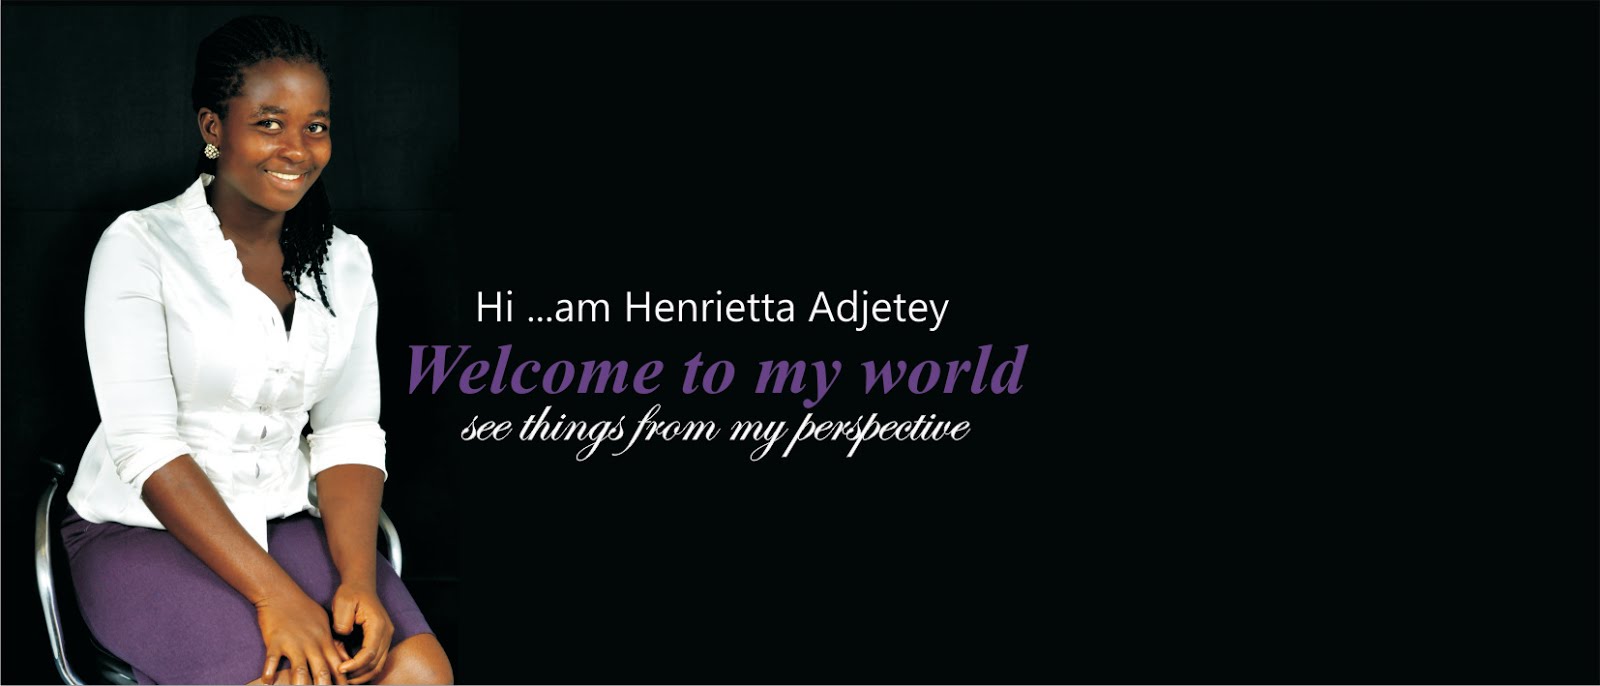 Henrietta Adjetey